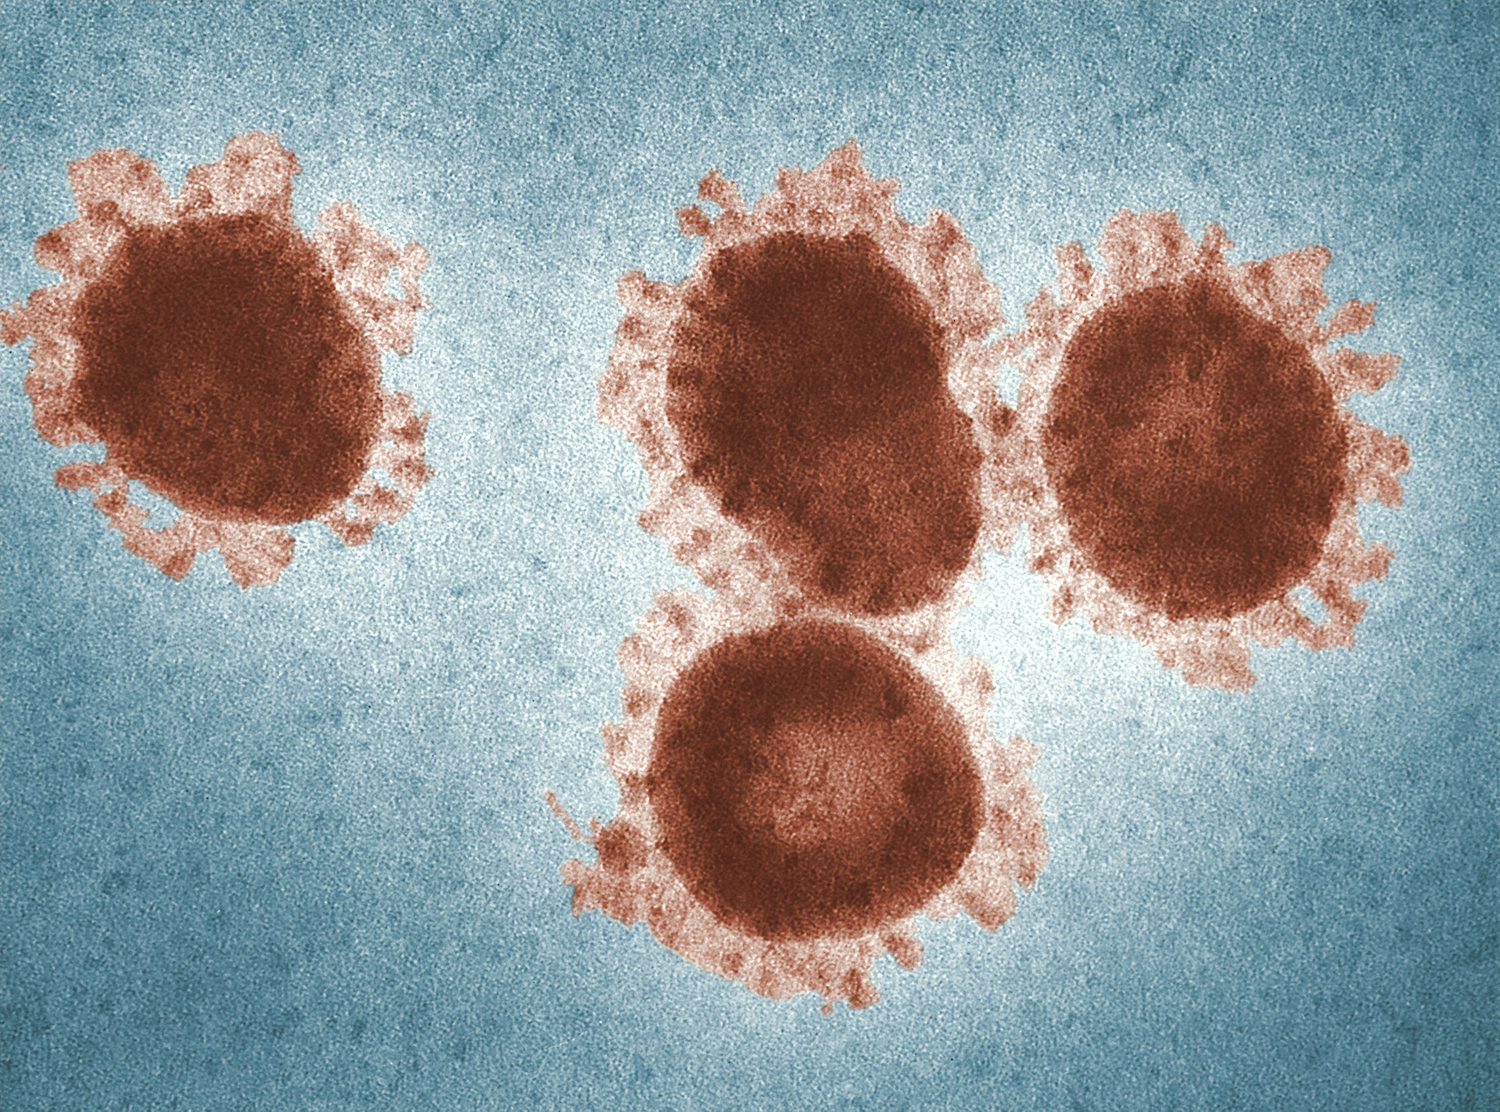 Close-up of Coronavirus disease under a microscope